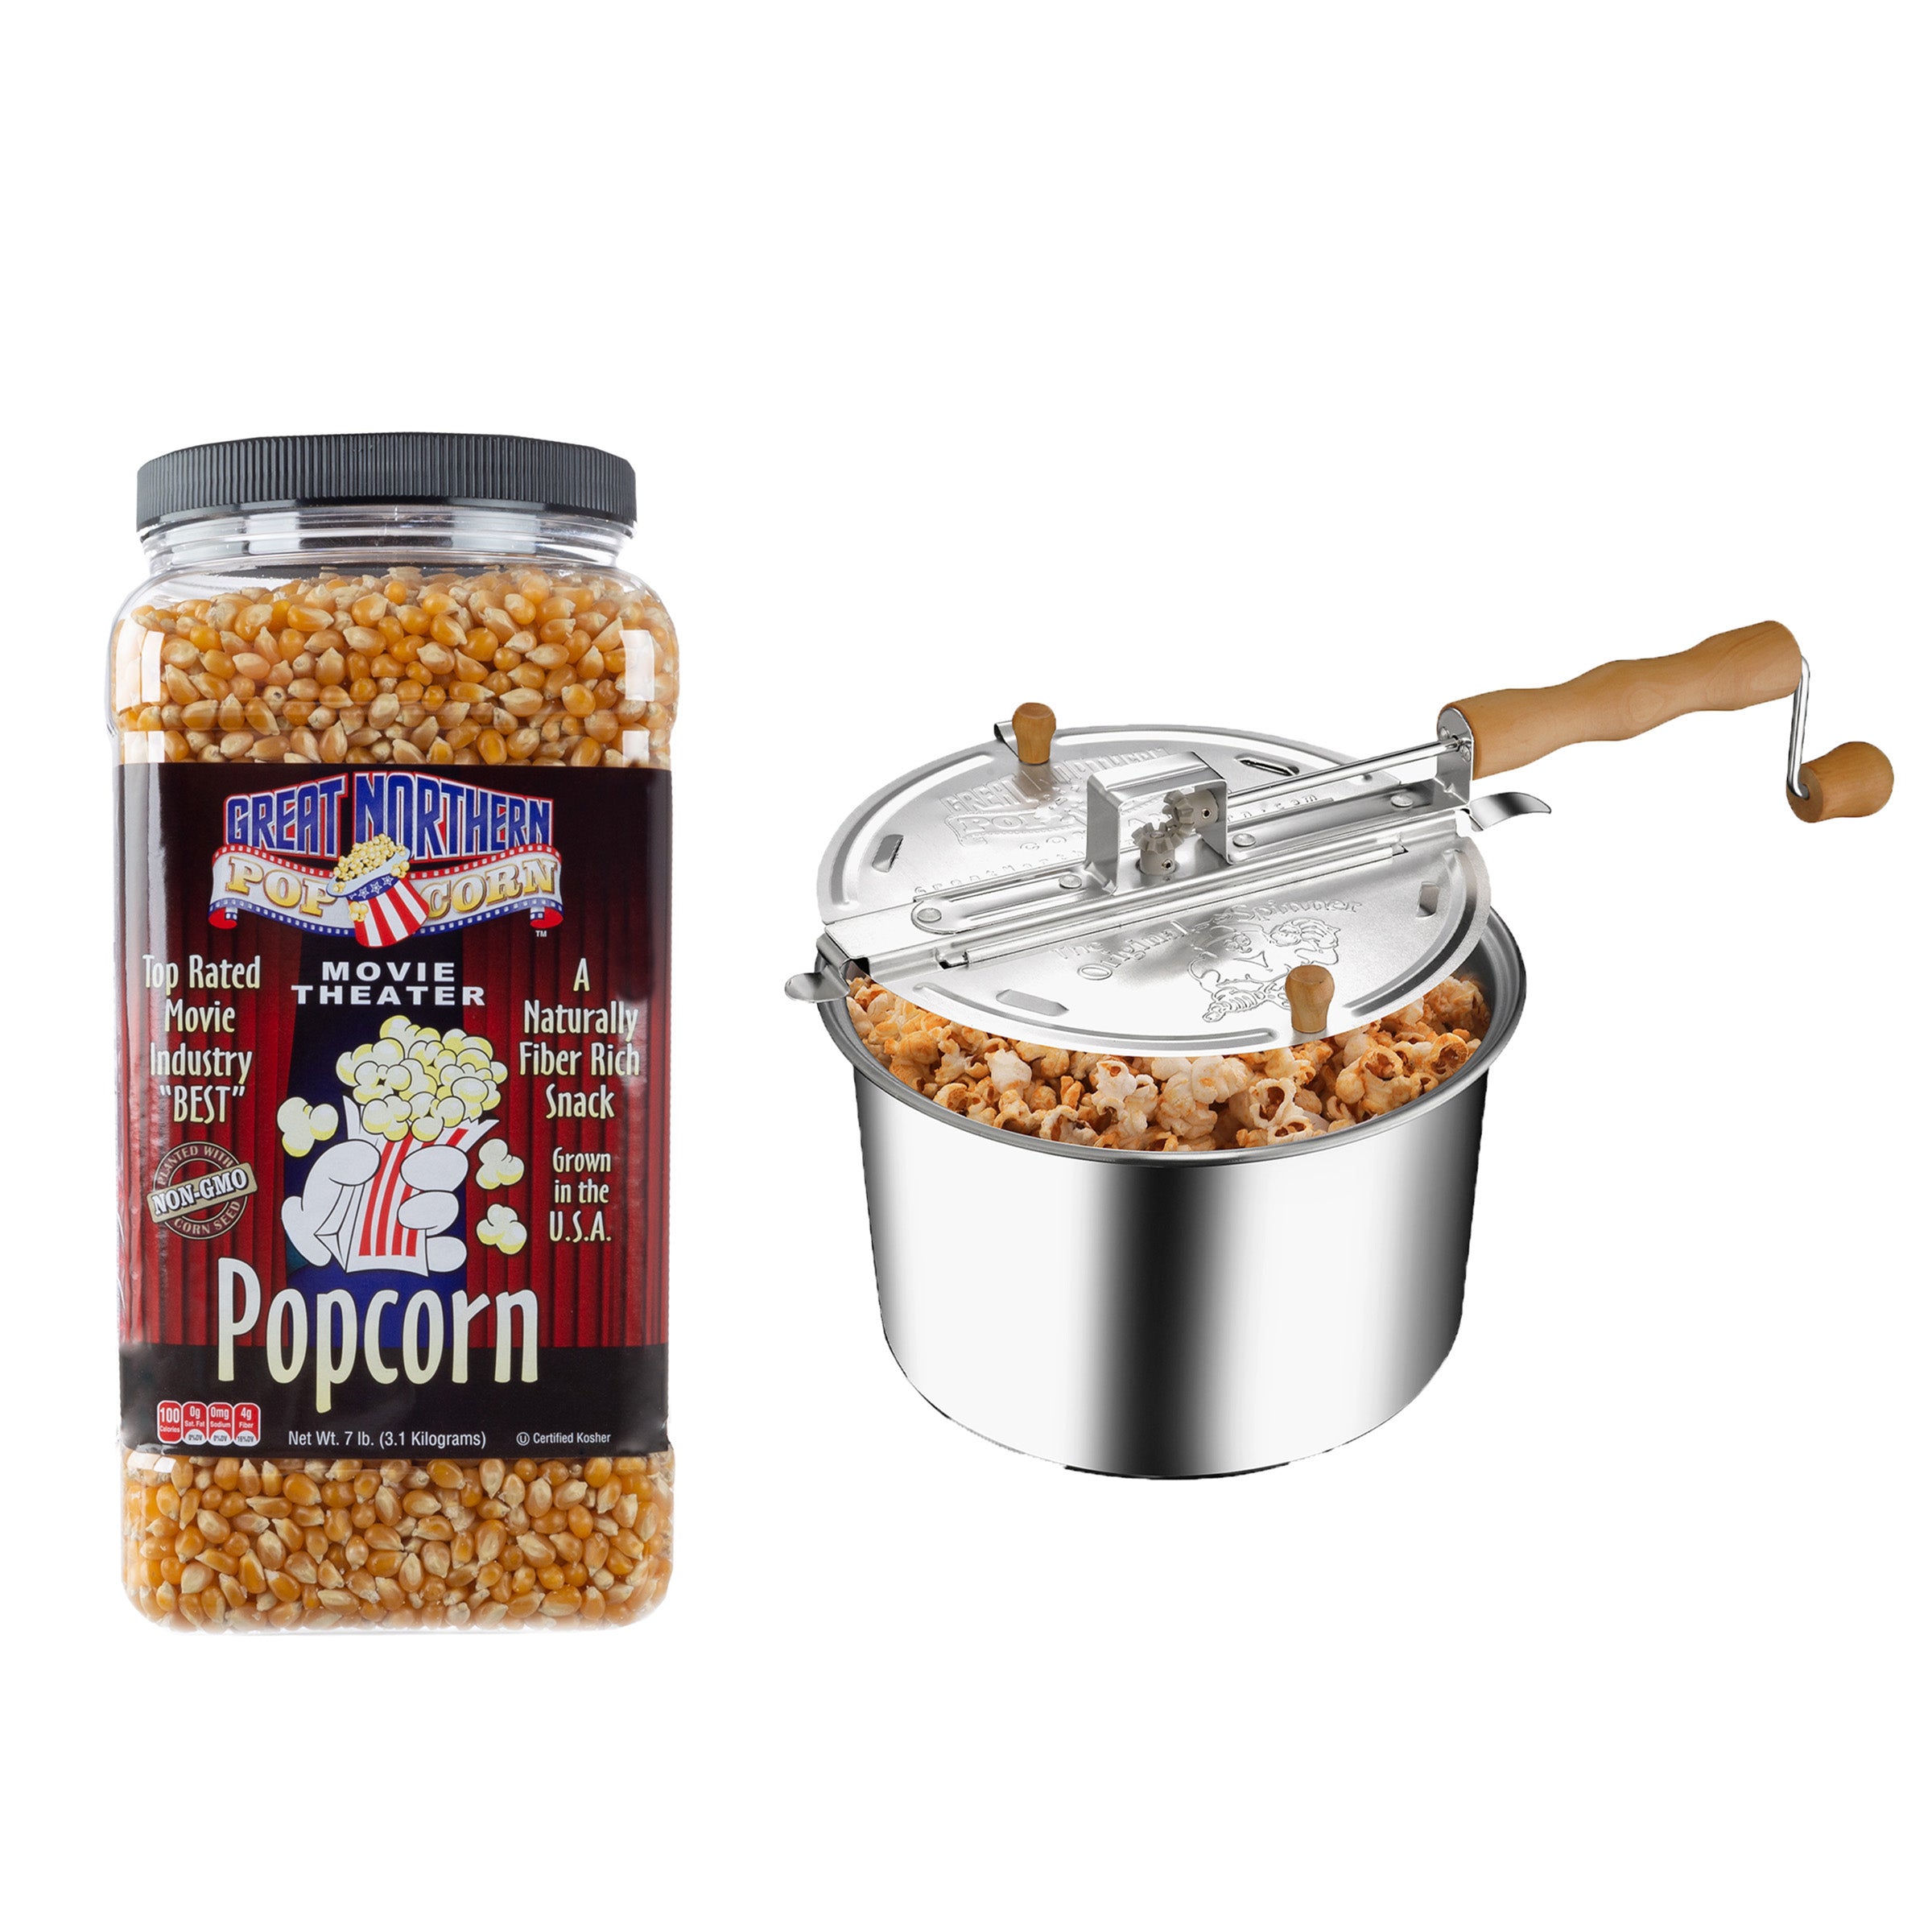 Barton Stovetop Popcorn Maker Pop Popcorn Popper Stirring Crank Cooker  Kettle Popcorn Popper with Wooden Handle 